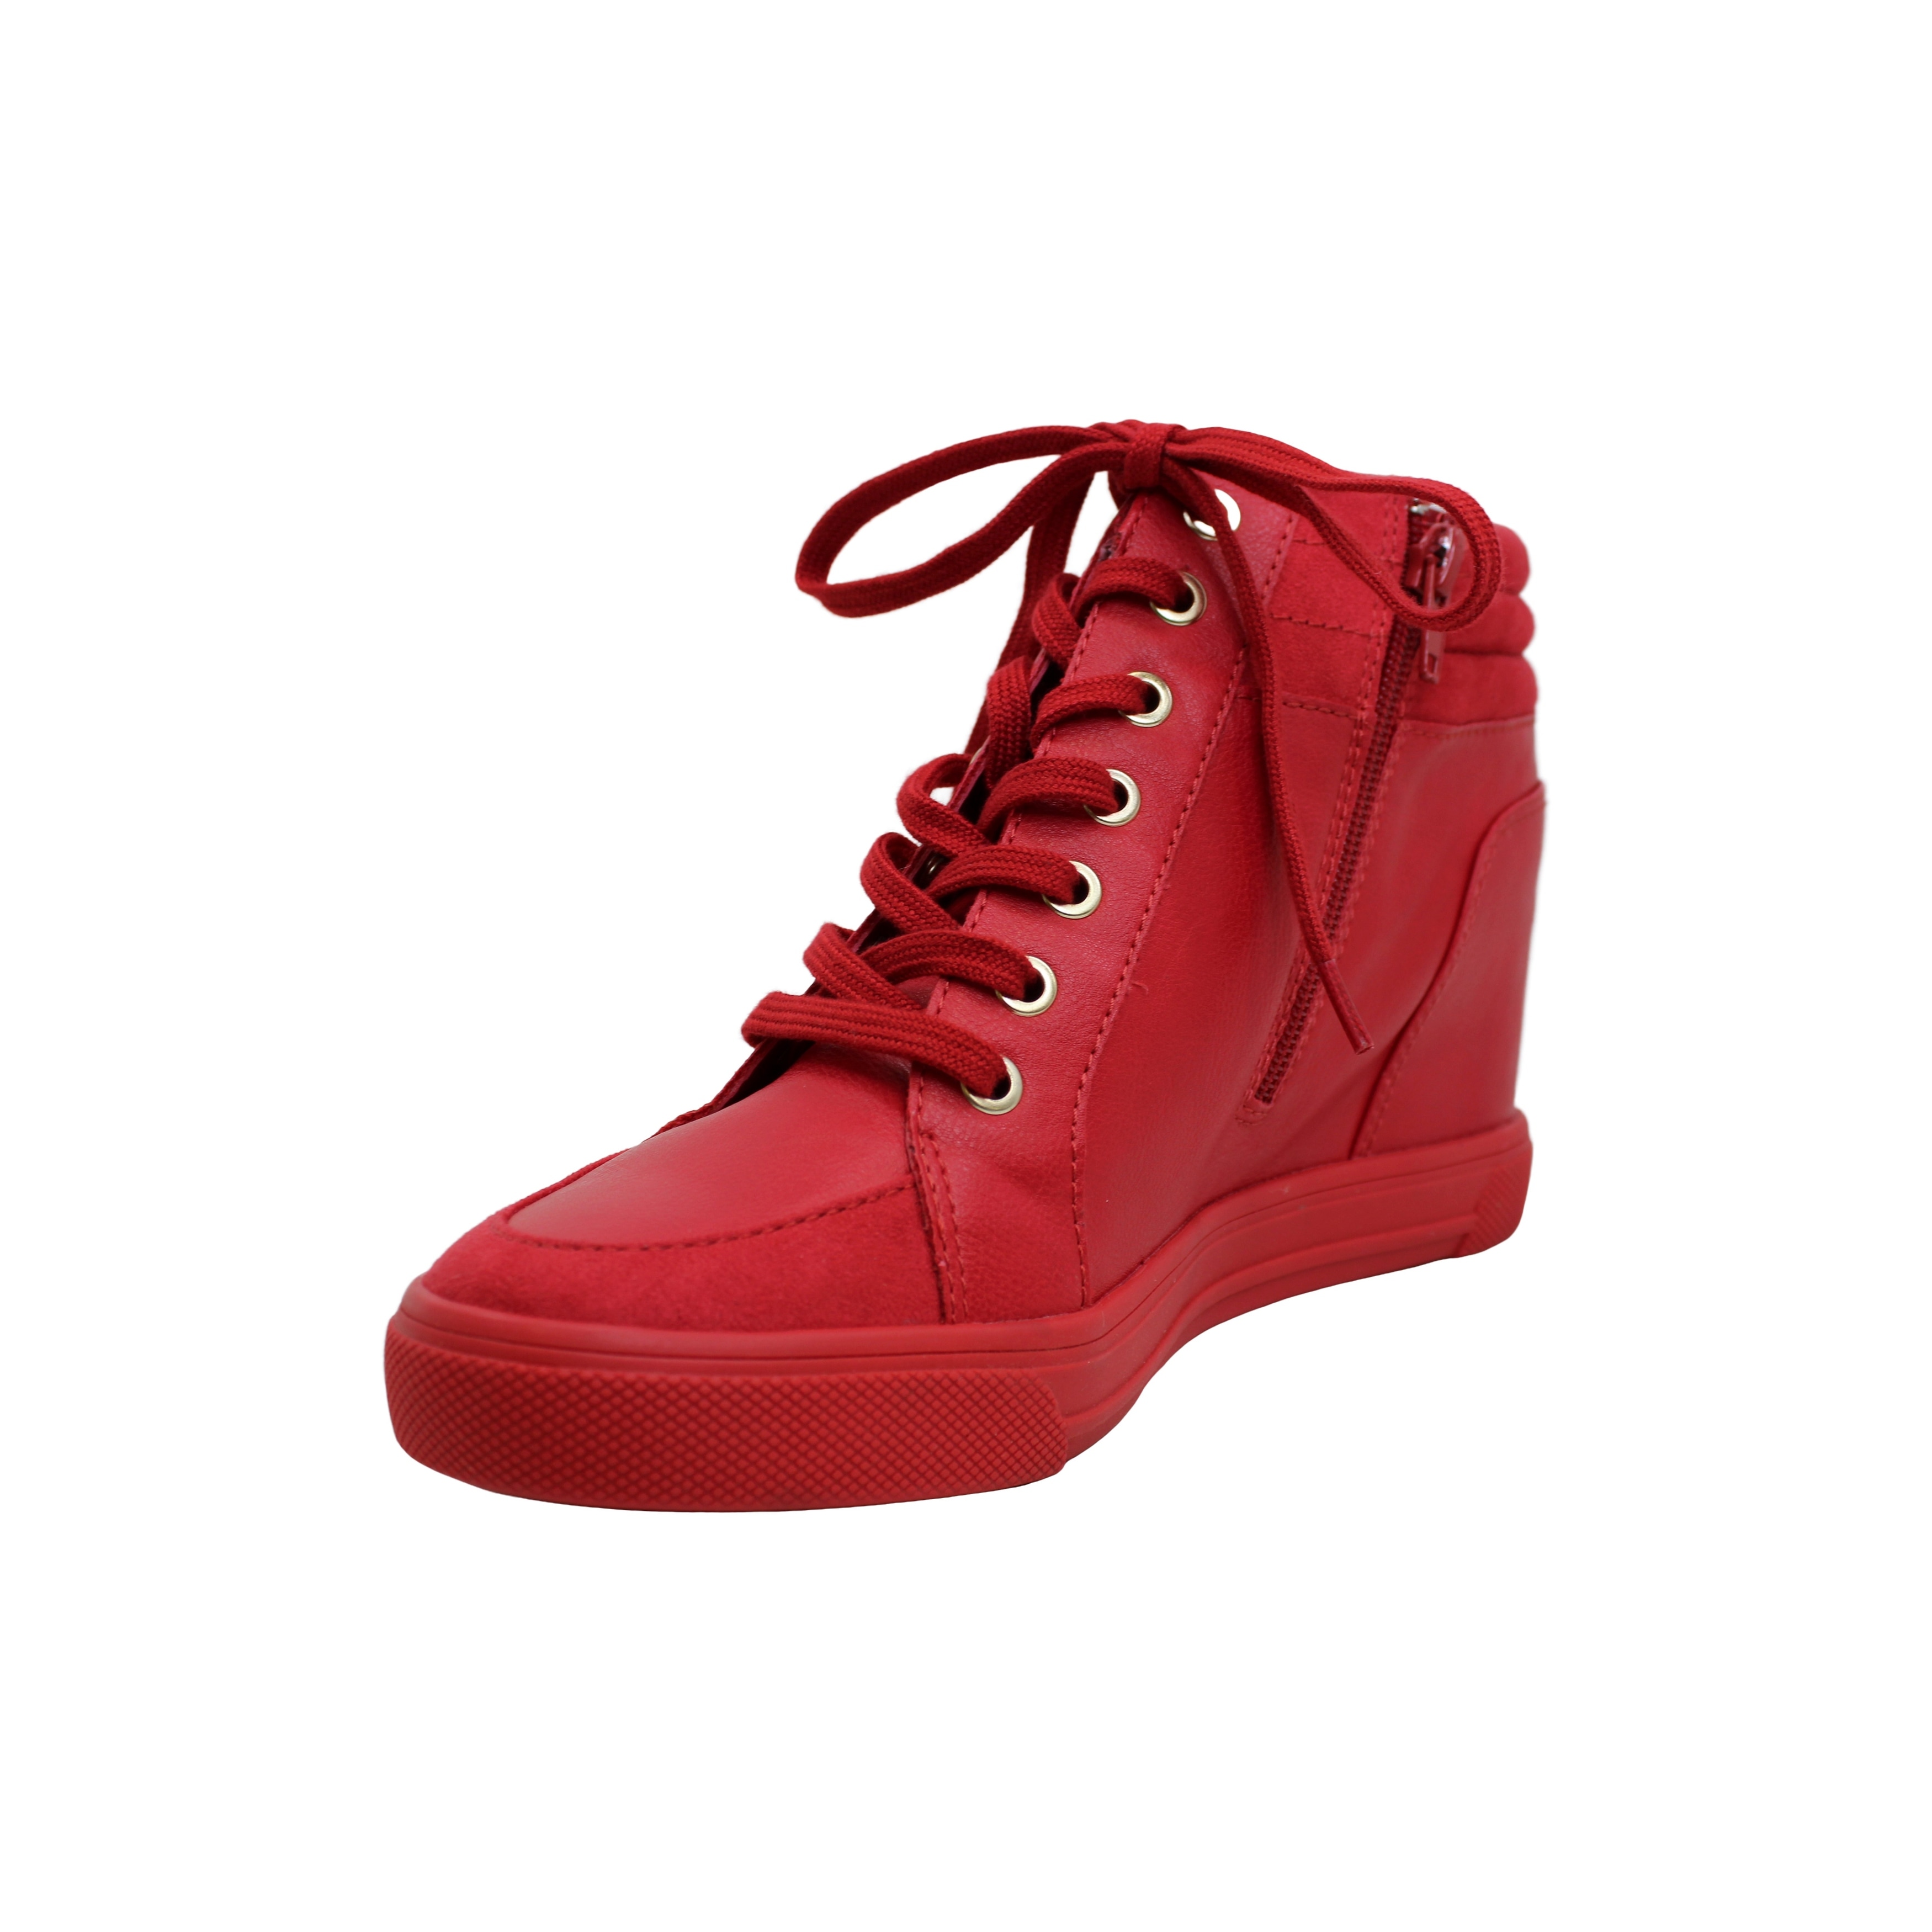 aldo red sneaker wedges